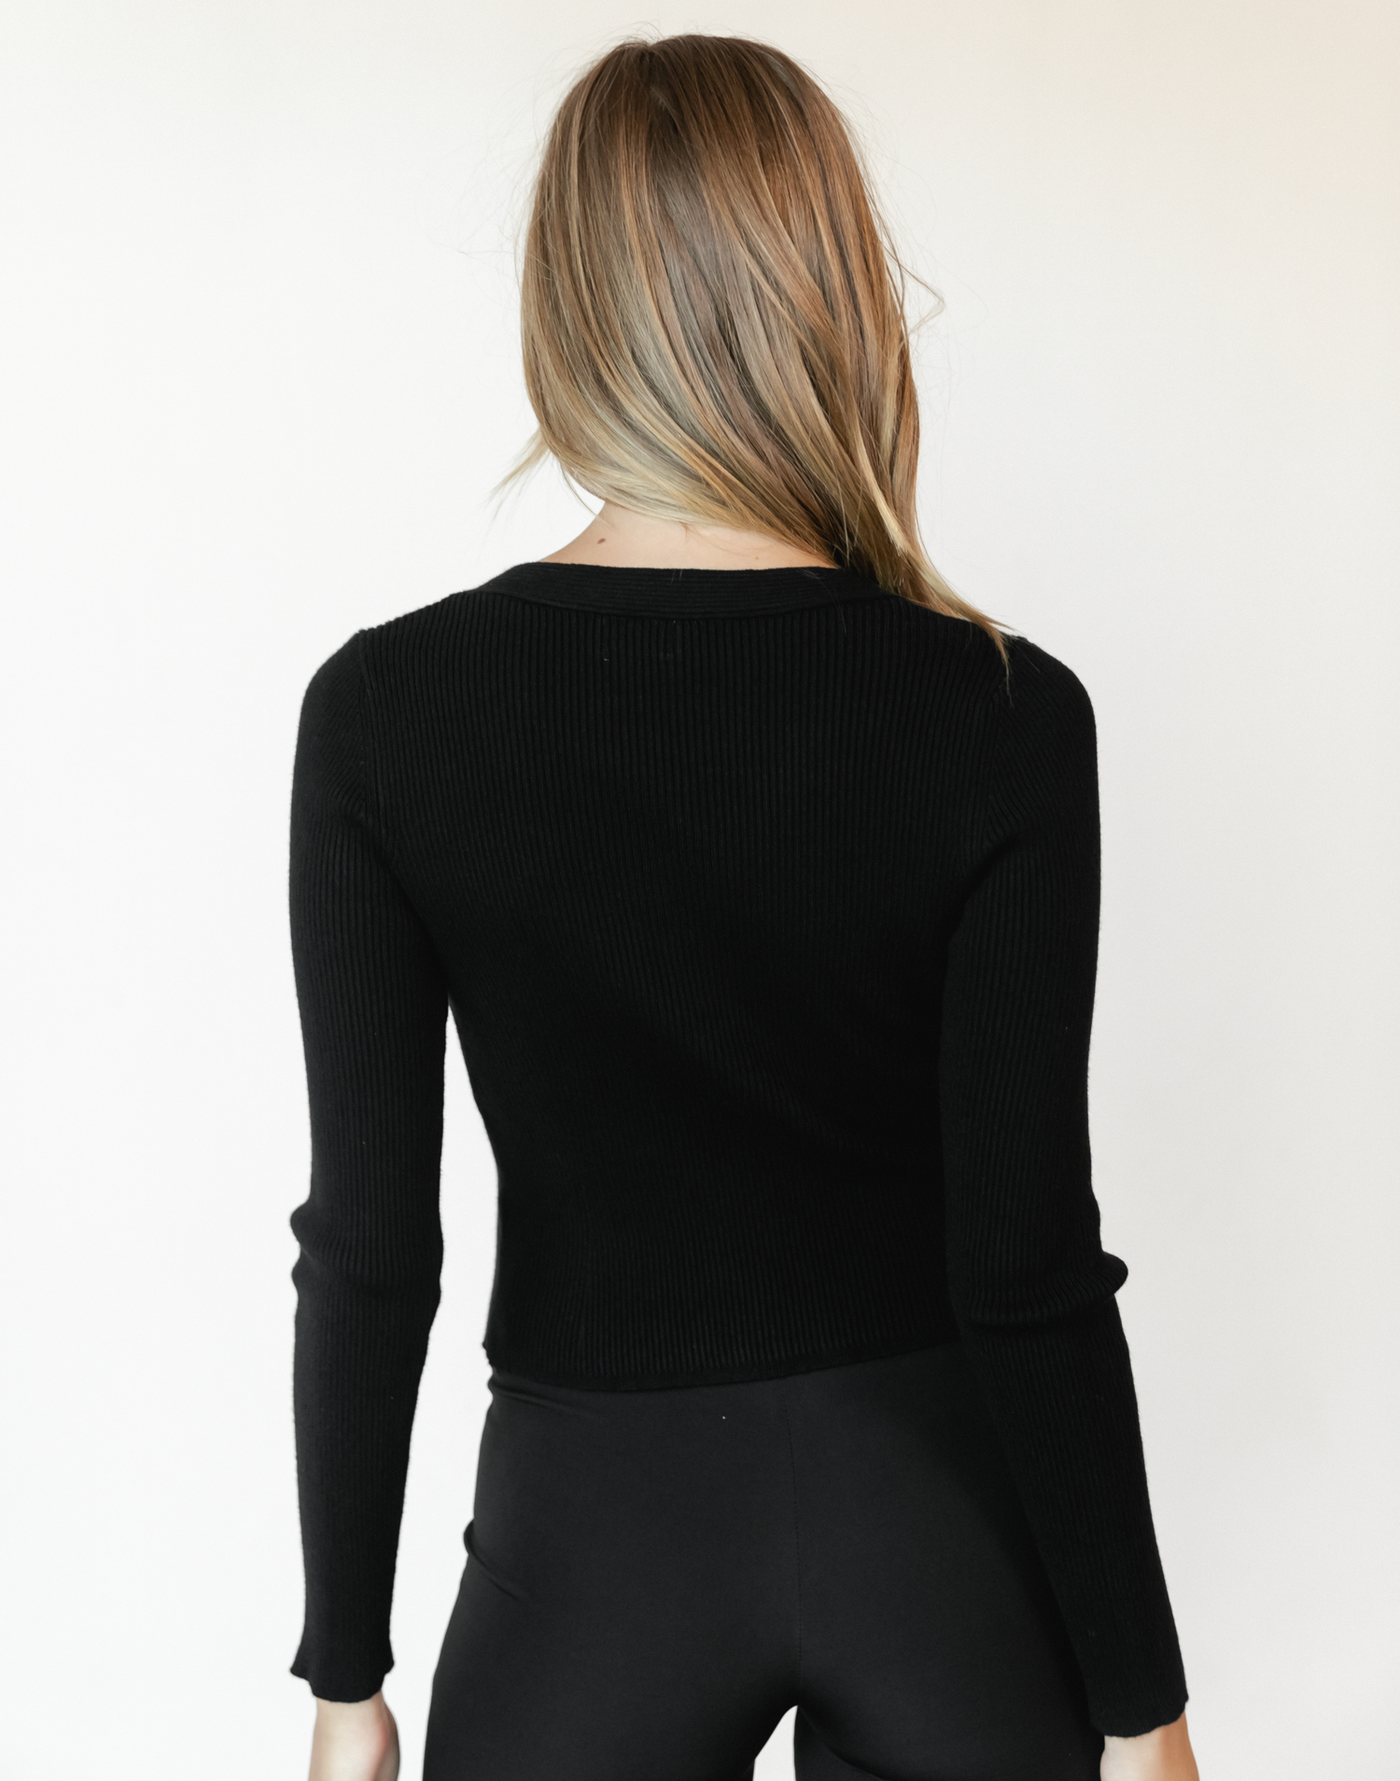 Mendi Long Sleeve Top (Black) - Knit Twist Long Sleeve Top - Women's Top - Charcoal Clothing